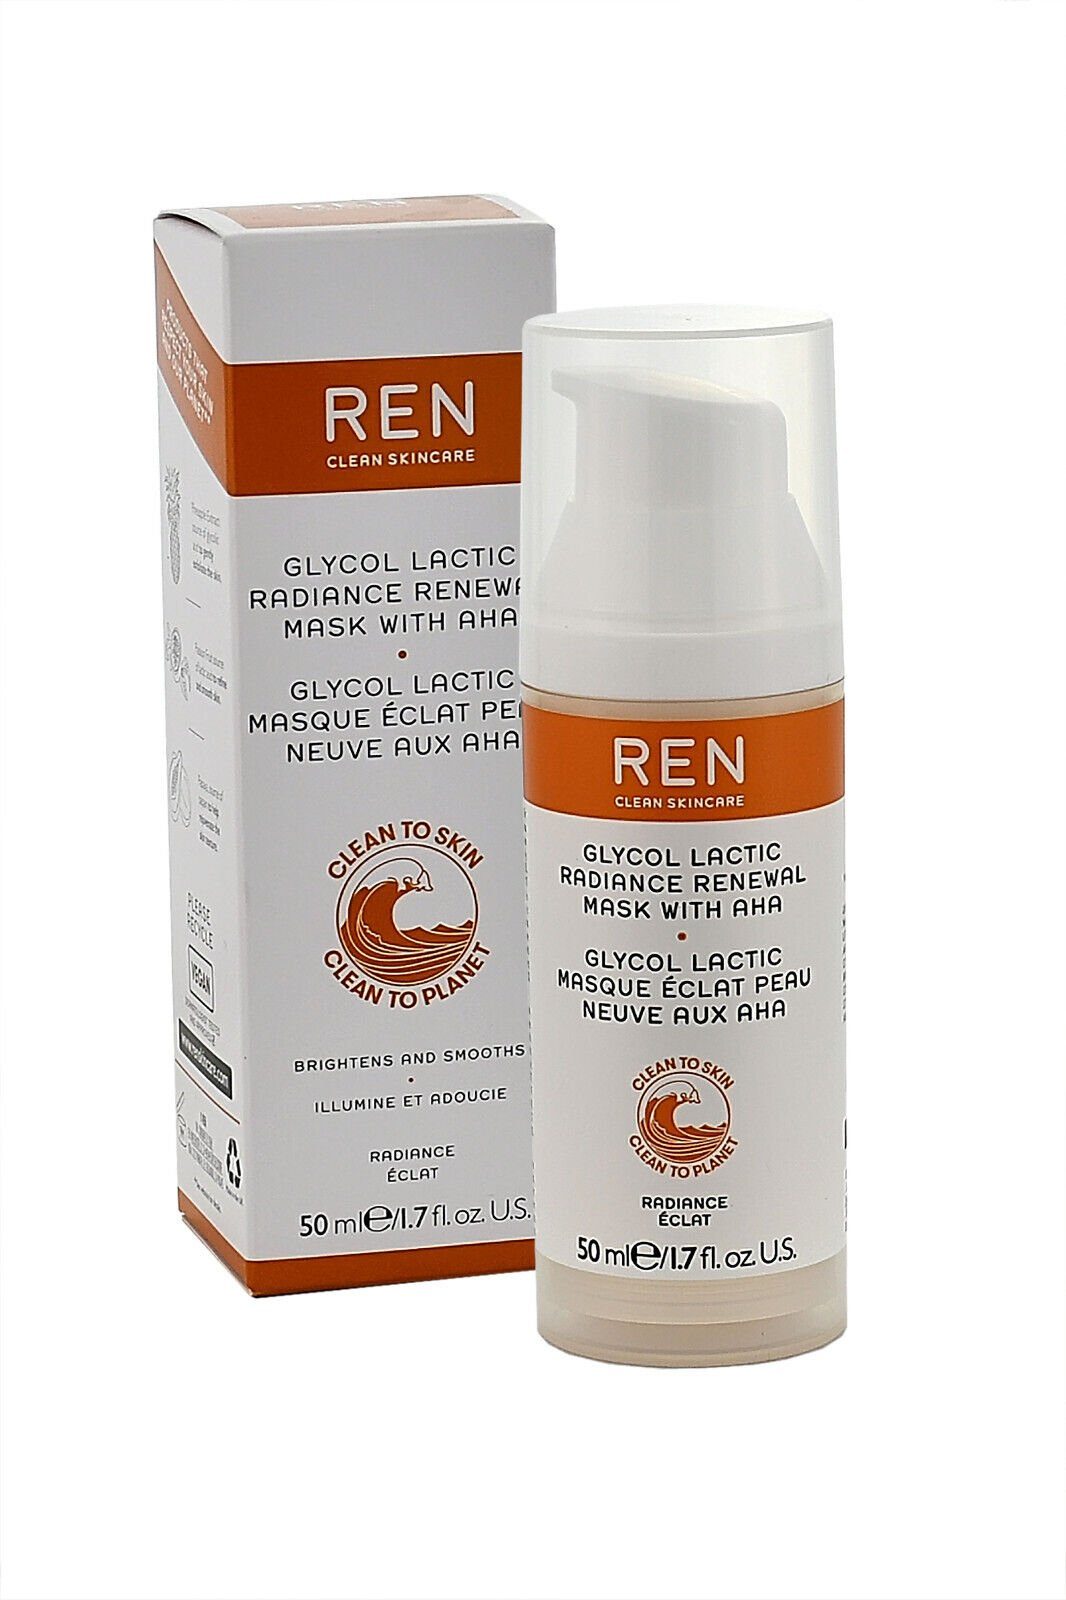 LACTIC GLYCO REN RENEWAL Gesichtsmaske Clean MASK REN RADIANCE Skincare 50 ML